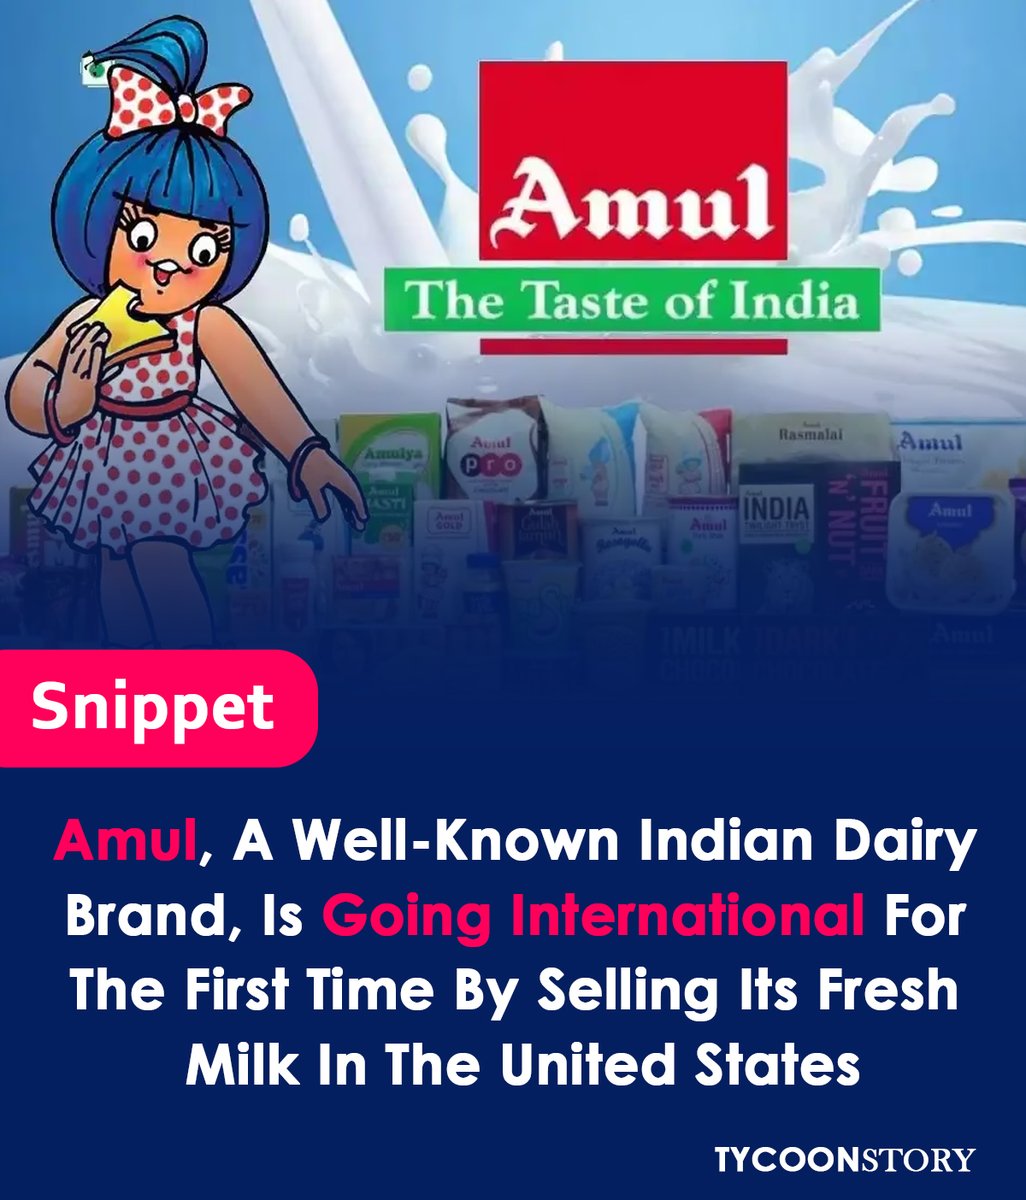 'Taste of India' Amul sets its sights on America.
#AmulGoesGlobal #AmulUSAFreshMilk #IndianDairy #TasteofIndiaGoesGlobal #MichiganMilkProducers #PMModi #GoldenJubilee #AmulBiggestDairy #OperationFlood #LargestMilkProducerIndia @Amul_Coop